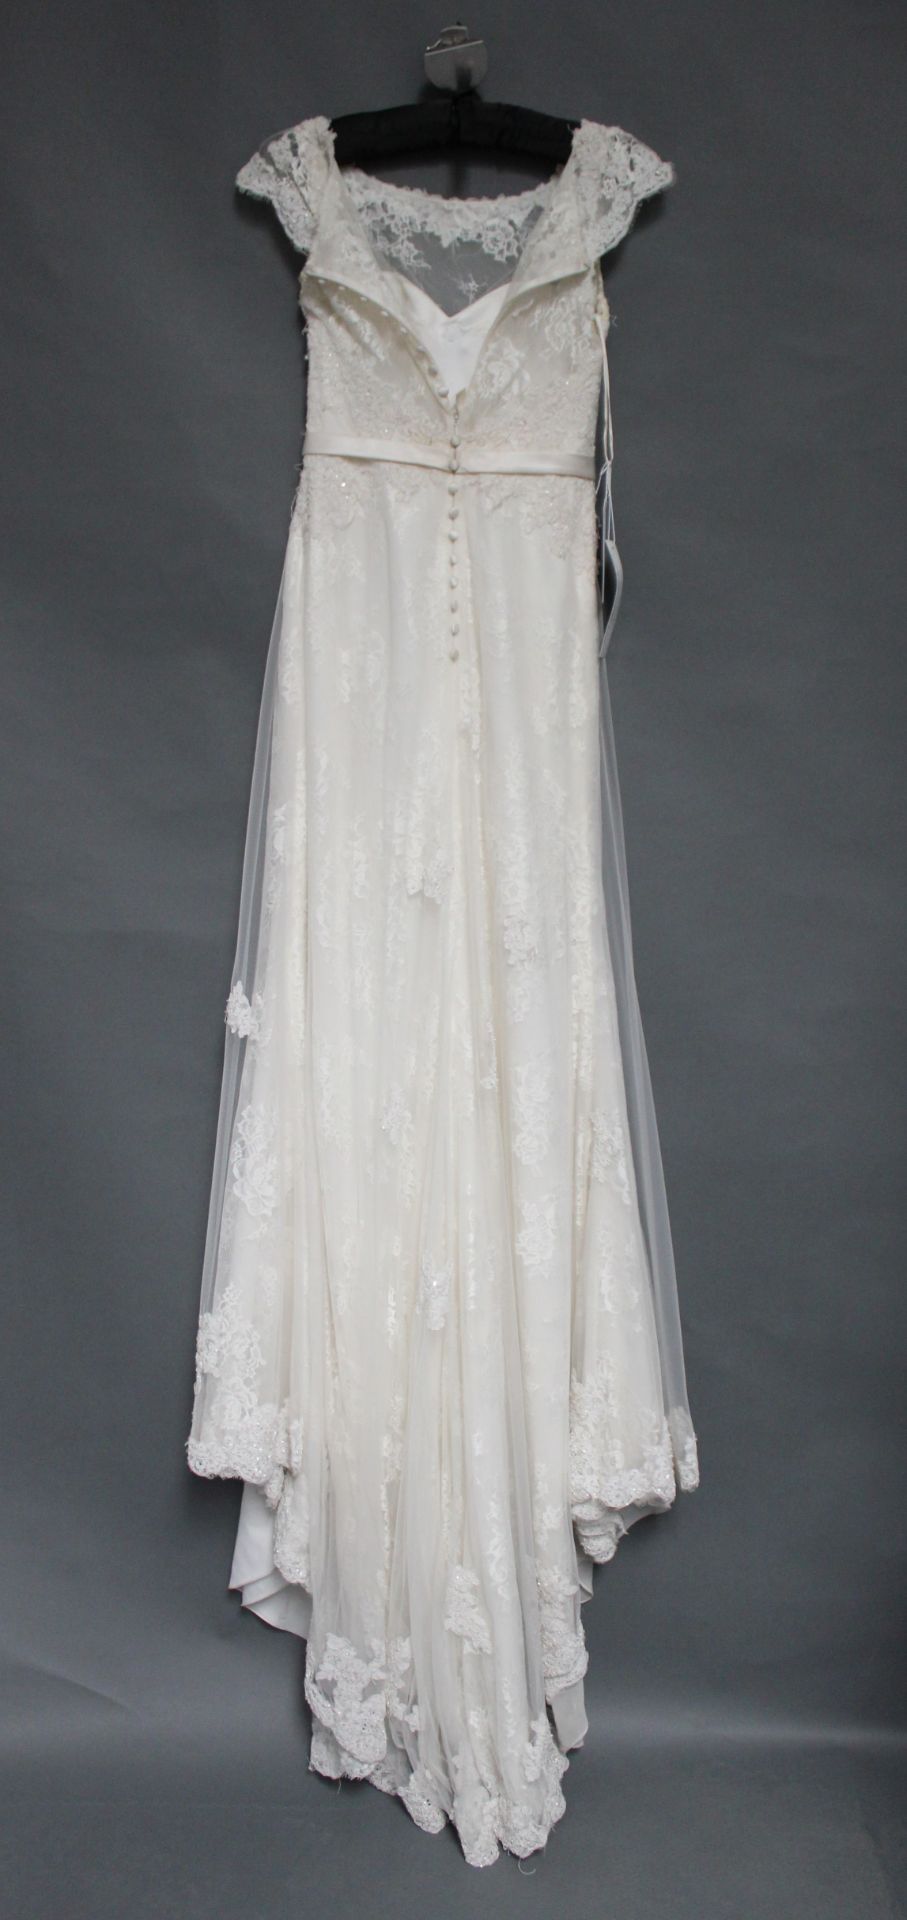 1 x LUSAN MANDONGUS/ ANNASUL Y Lace Overlay Full Skirt Designer Wedding Dress RRP £1,500 UK14 - Image 2 of 7